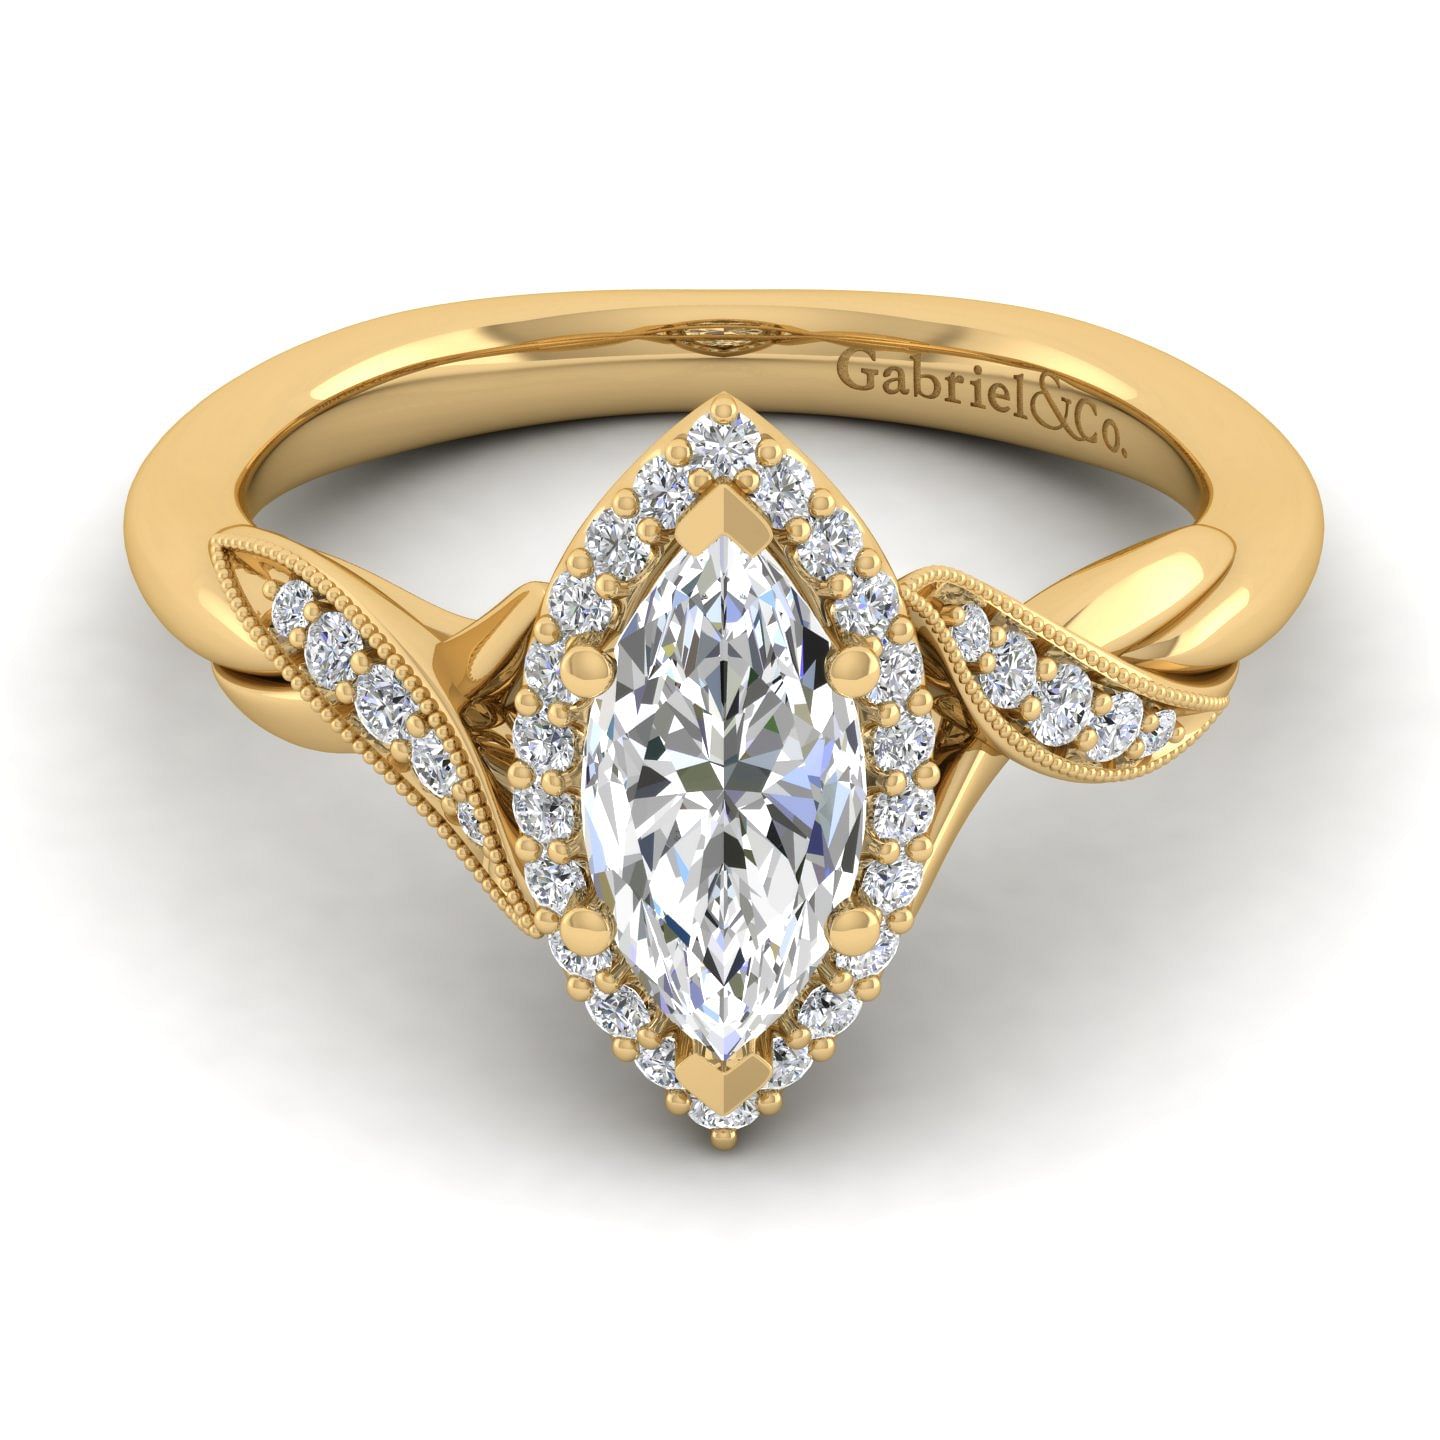 Shae - Vintage Inspired 14K Yellow Gold Marquise Halo Diamond Engagement Ring